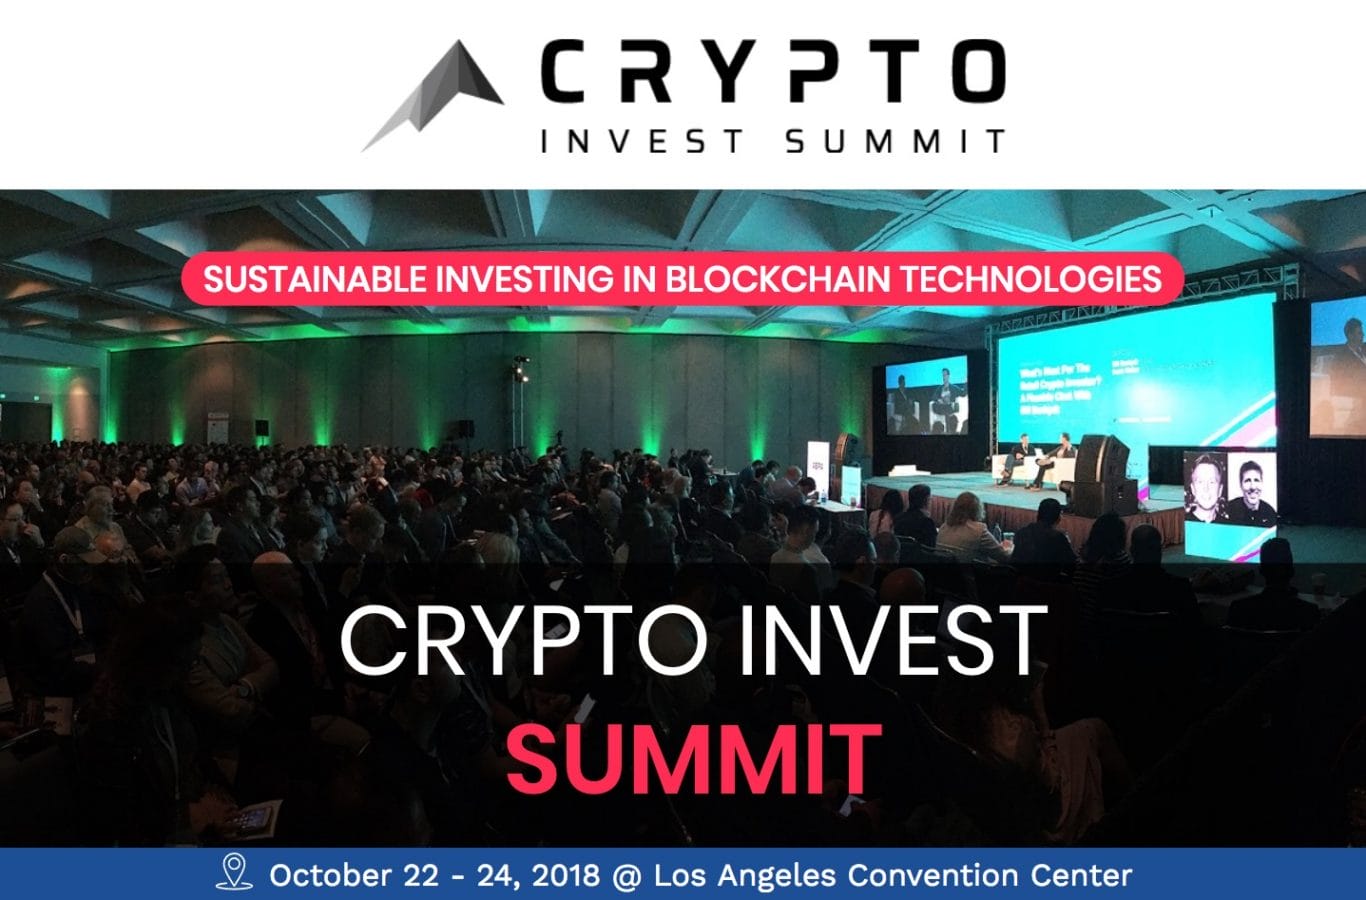 crypto invest summit photos